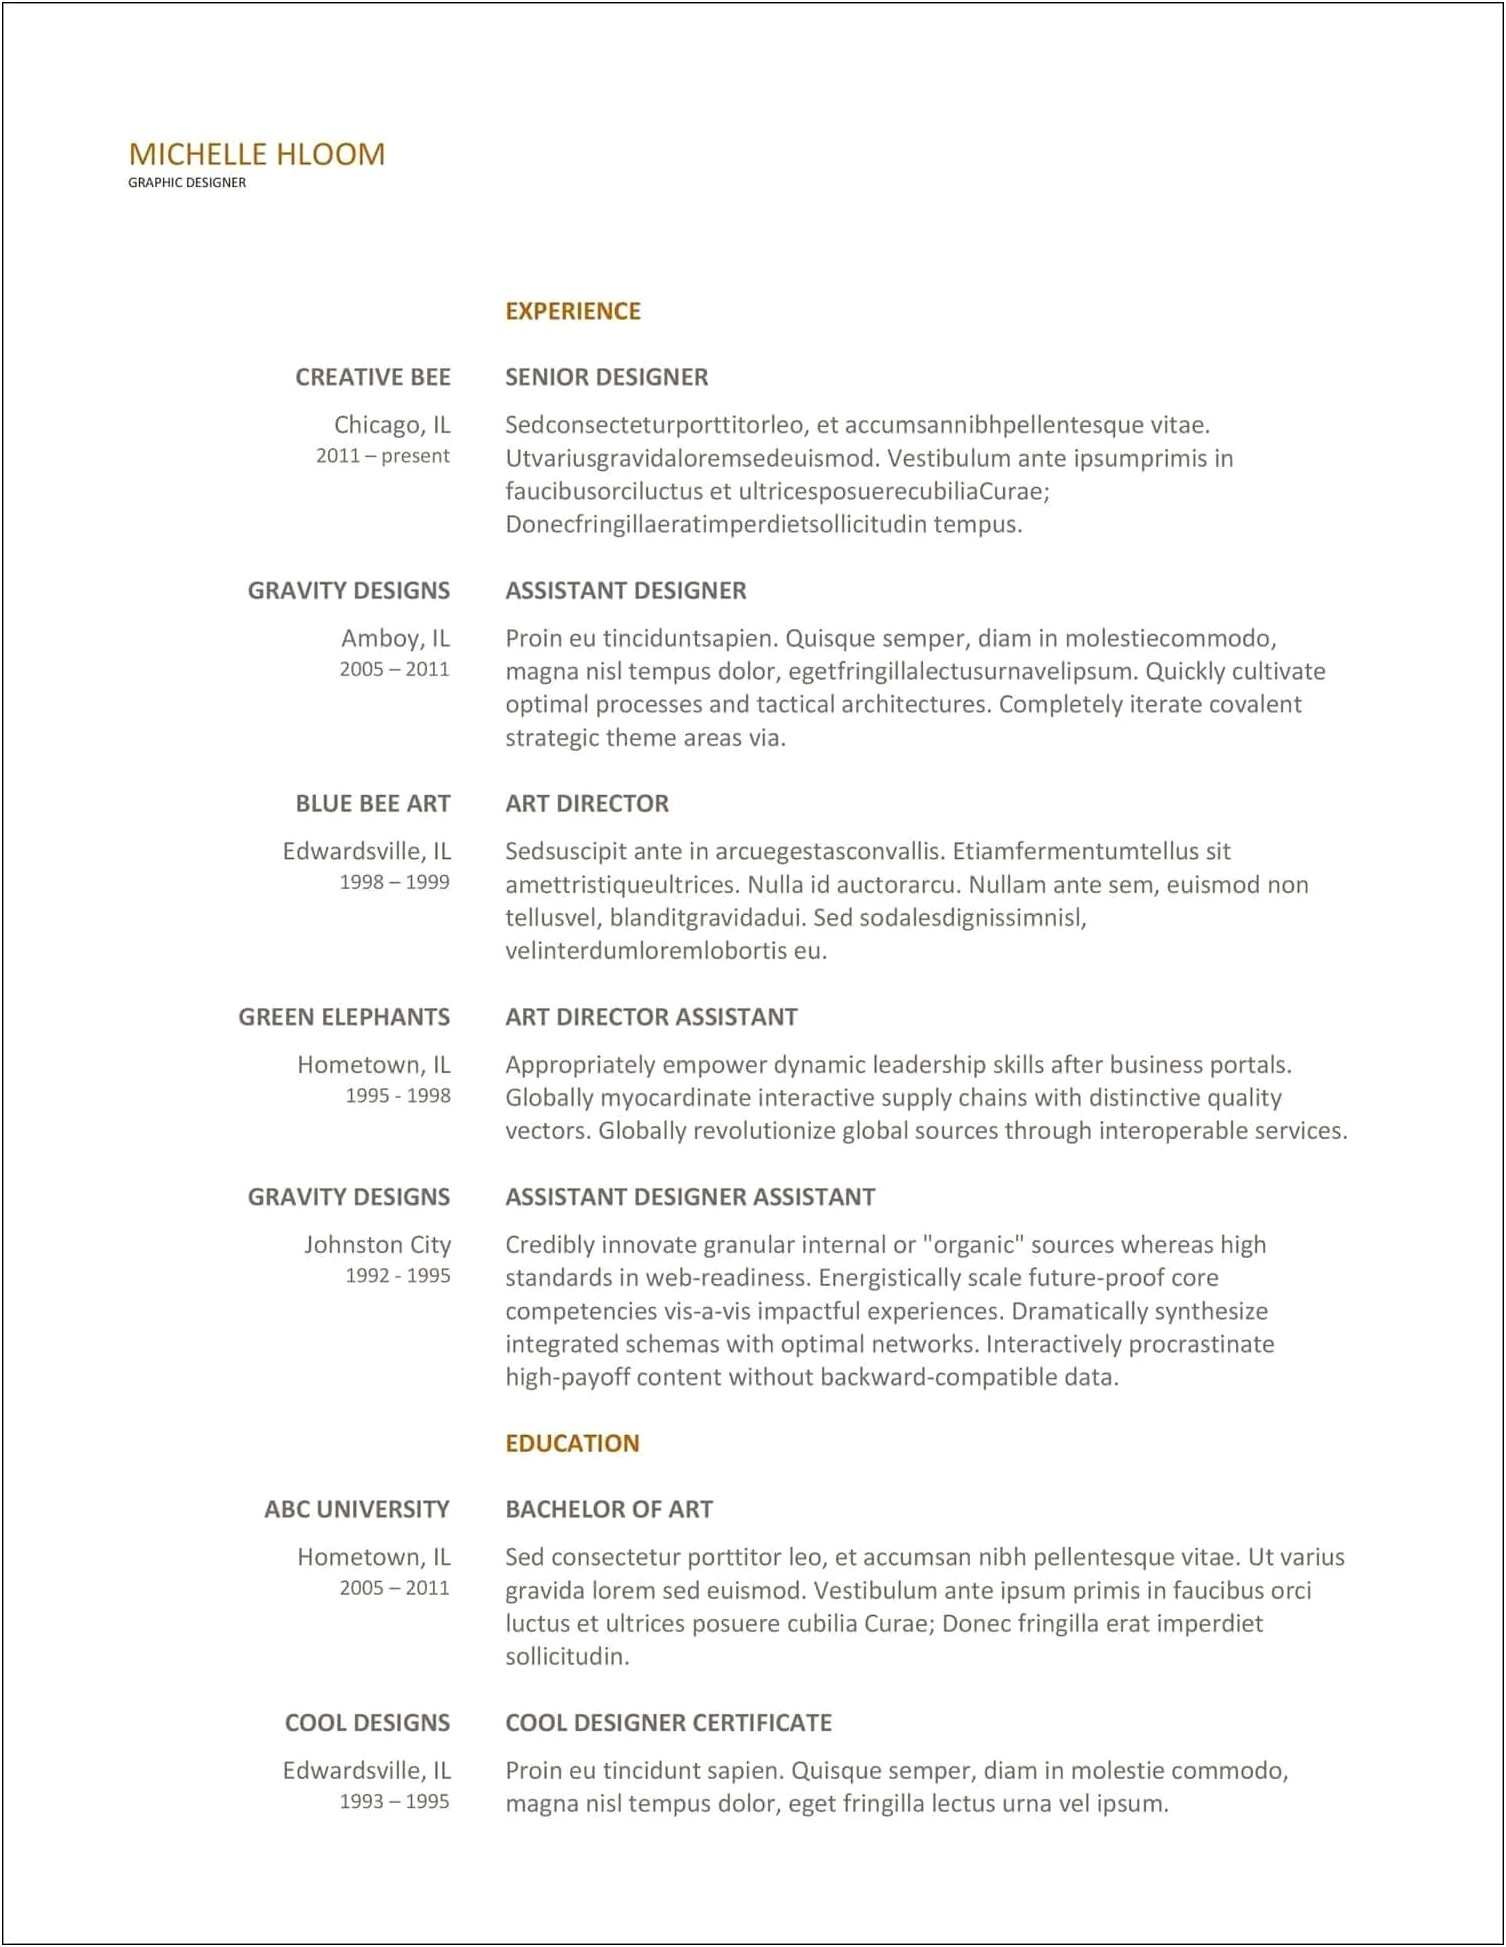 Sample Of Free Resume Templates